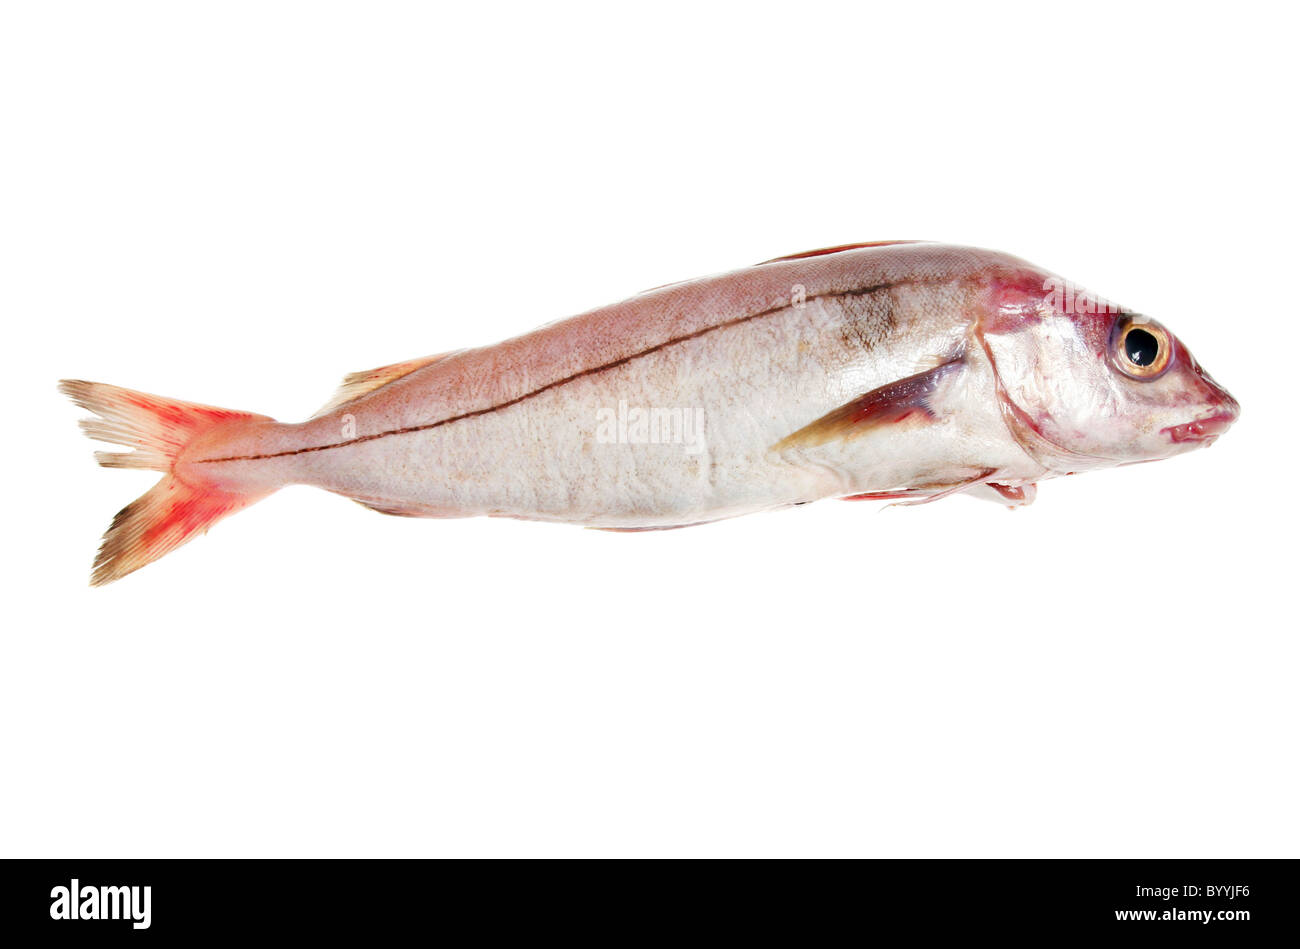 Whole haddock fish isolated on white Stock Photo